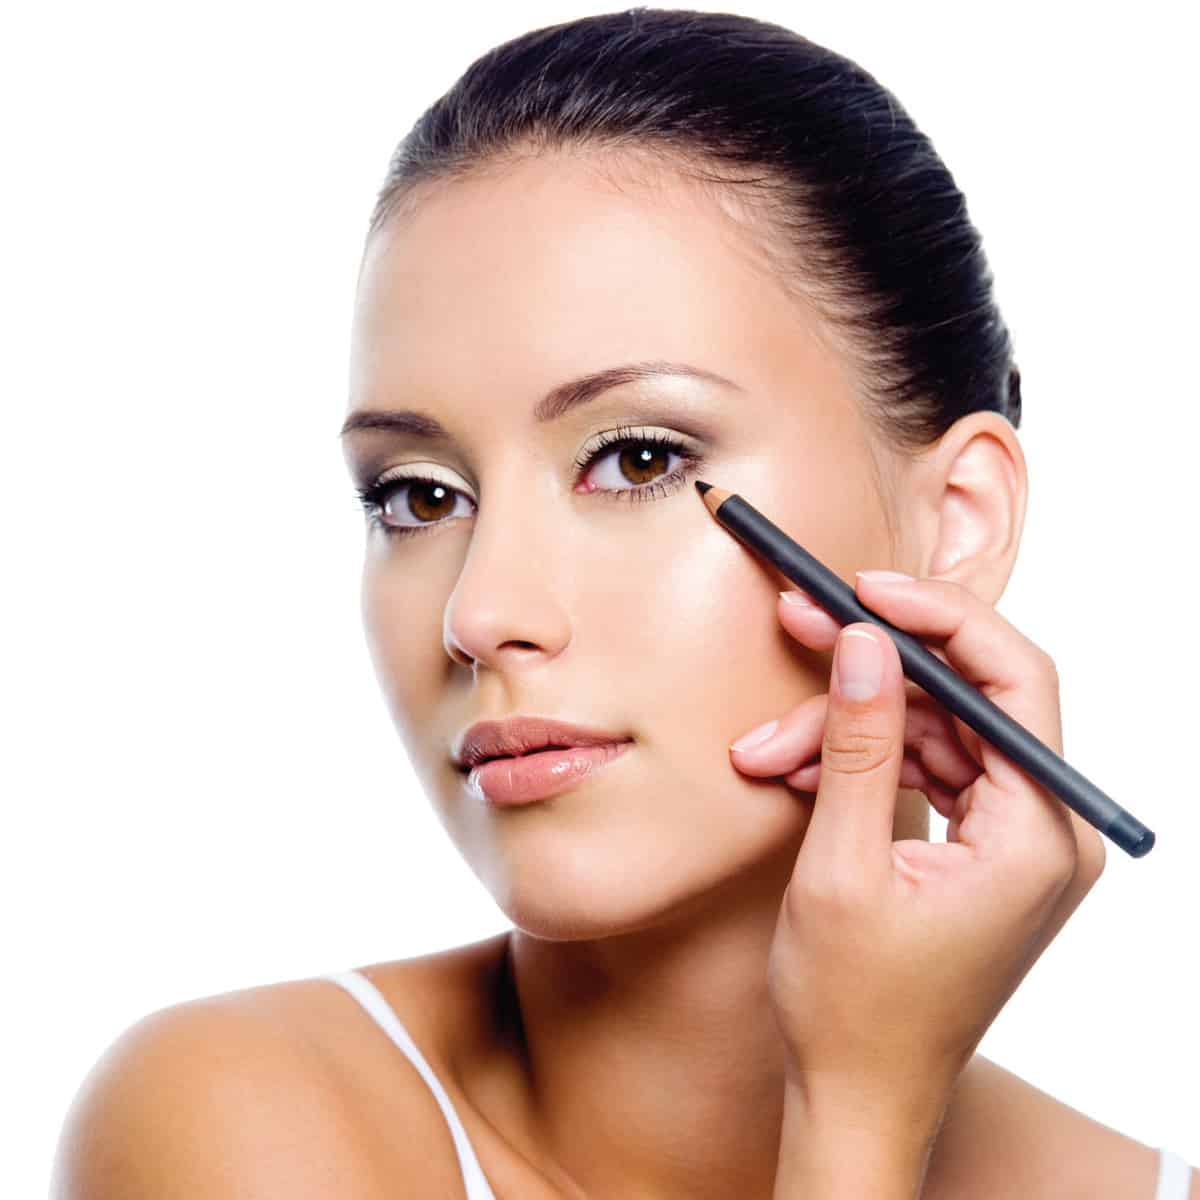 Woman applying eyeliner on eyelid with pencil